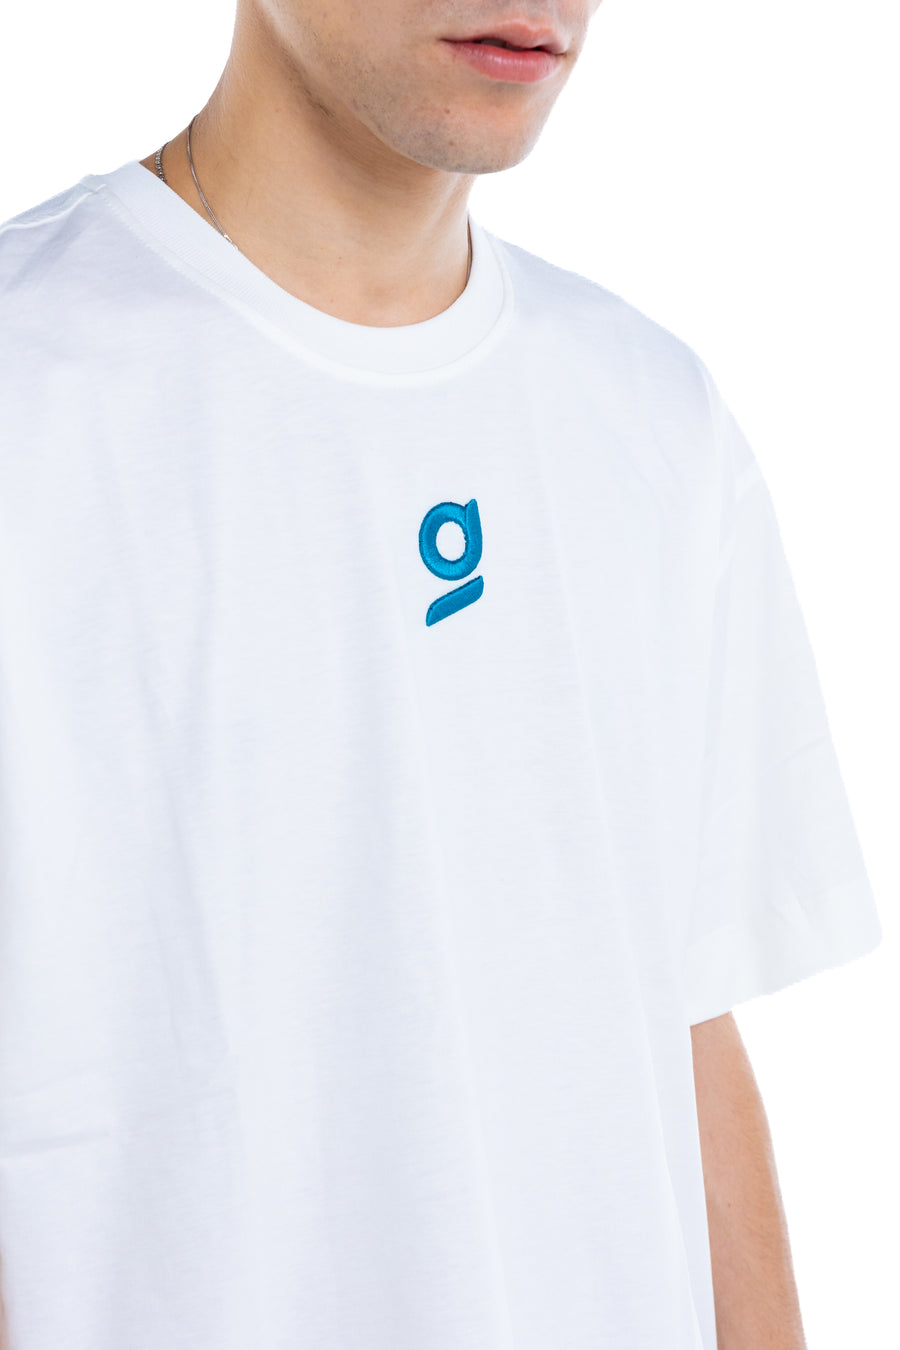 gavensemble t-shirt tee07